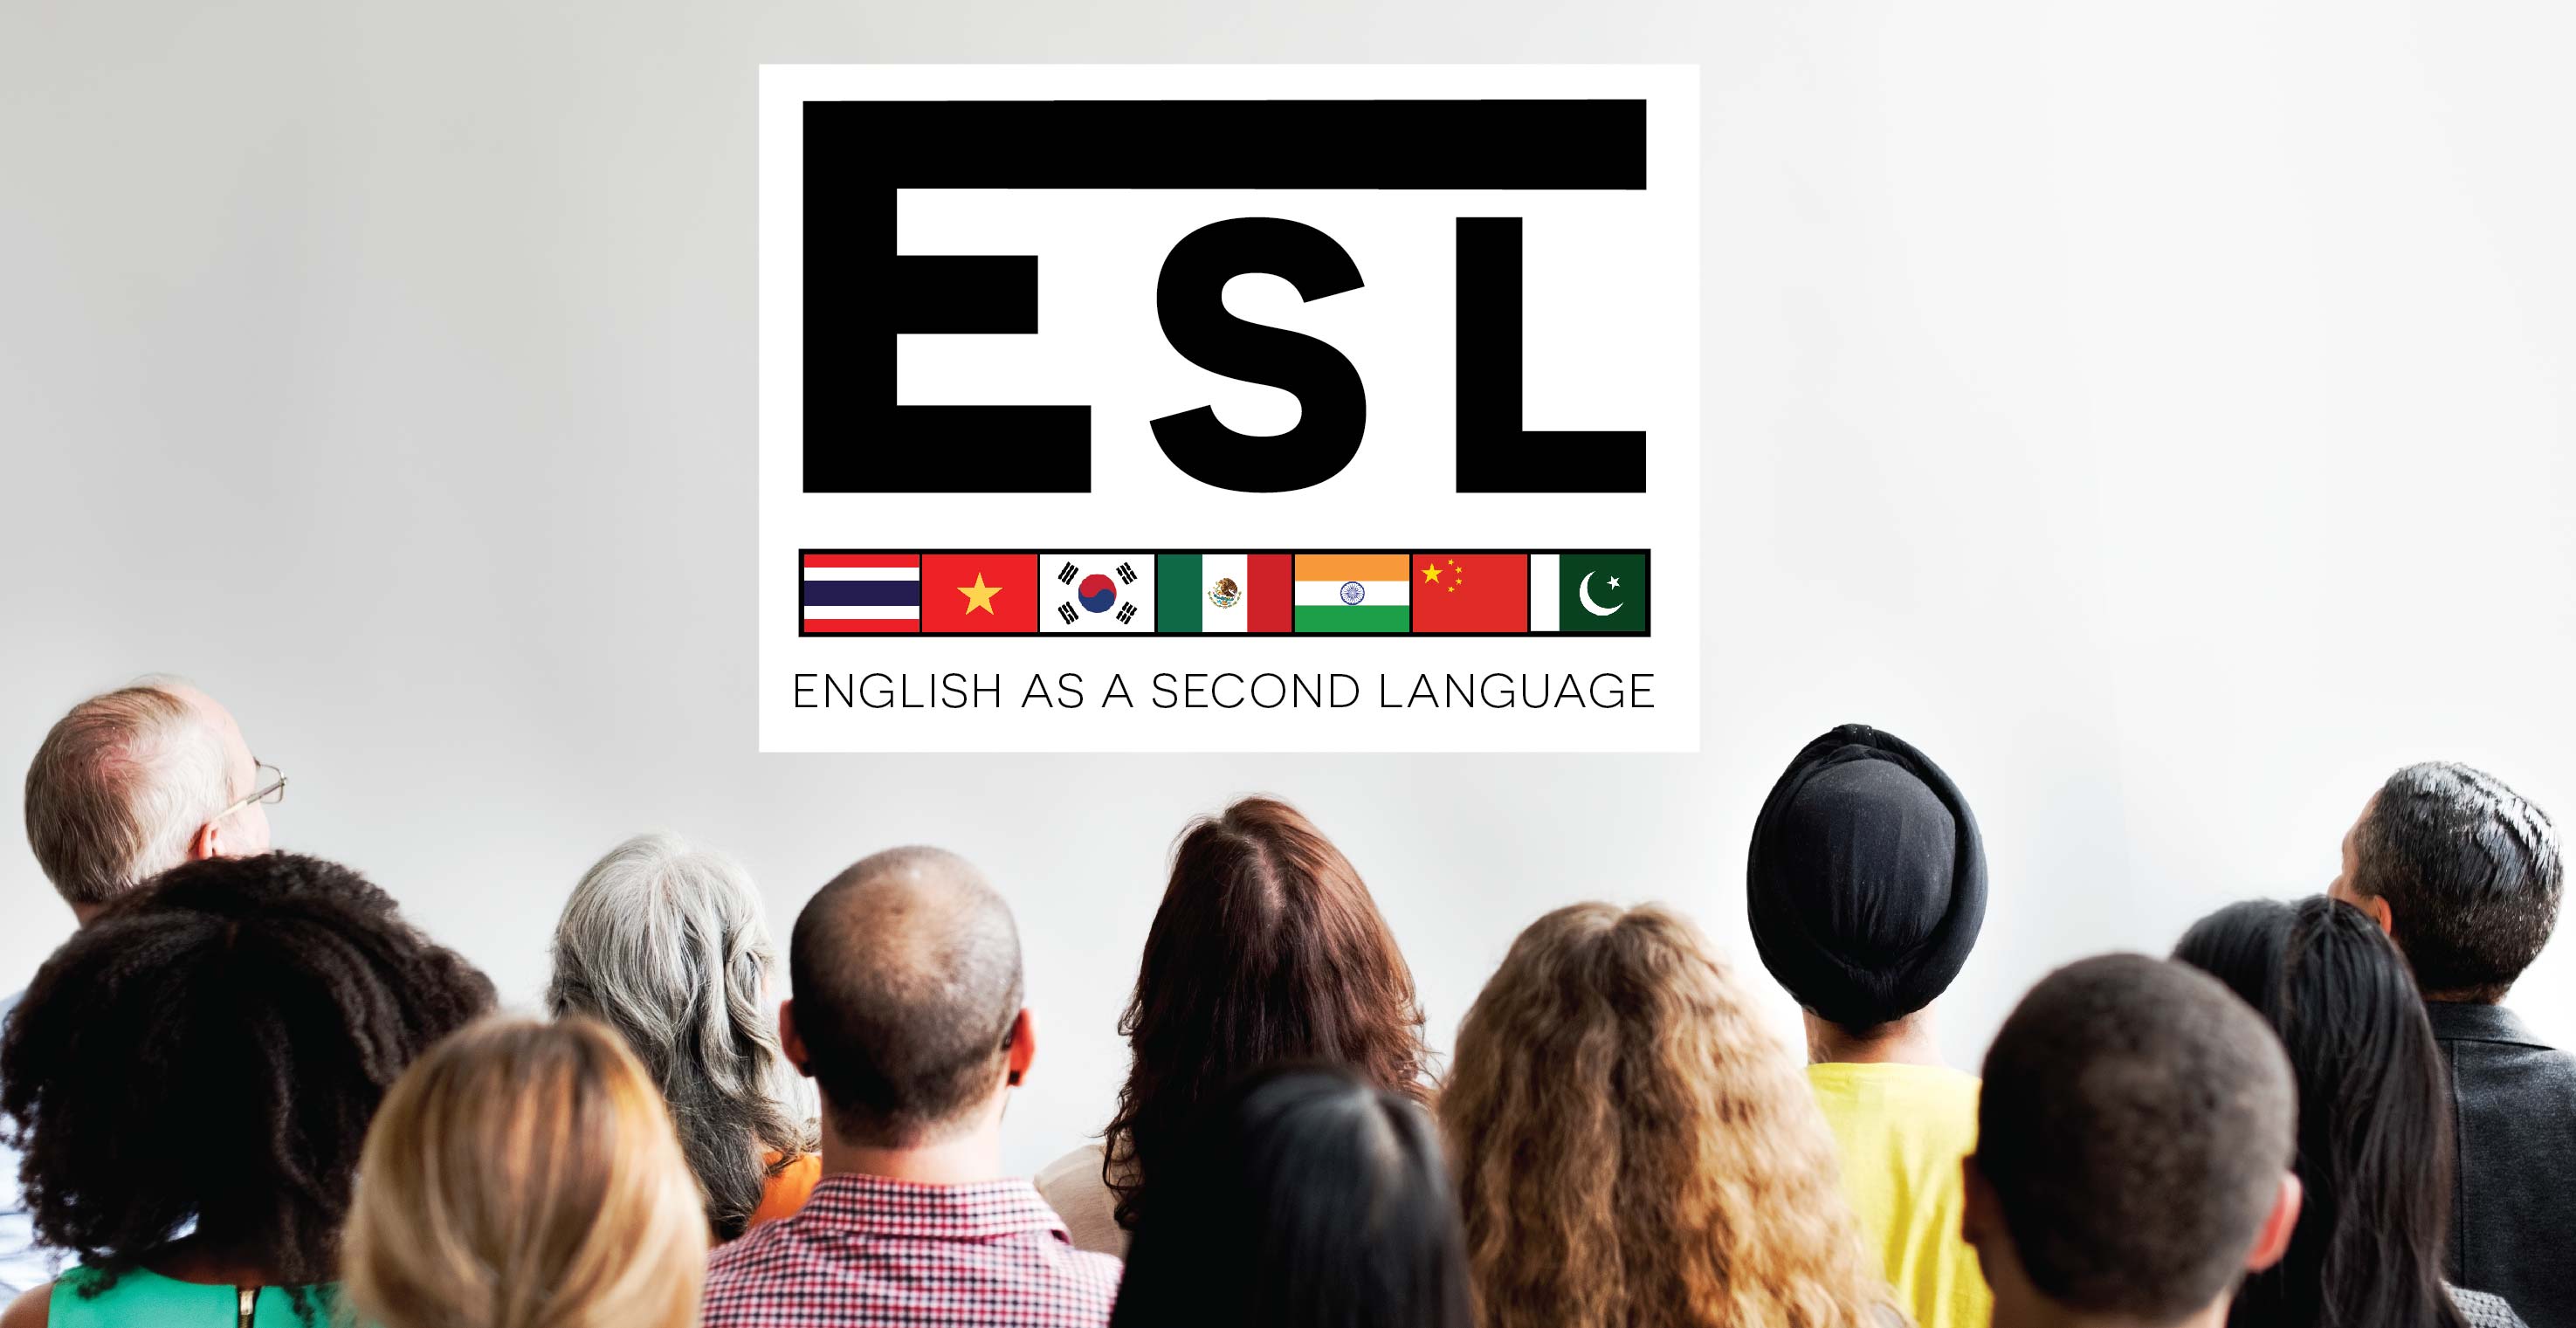 English as a Second Language Classes
